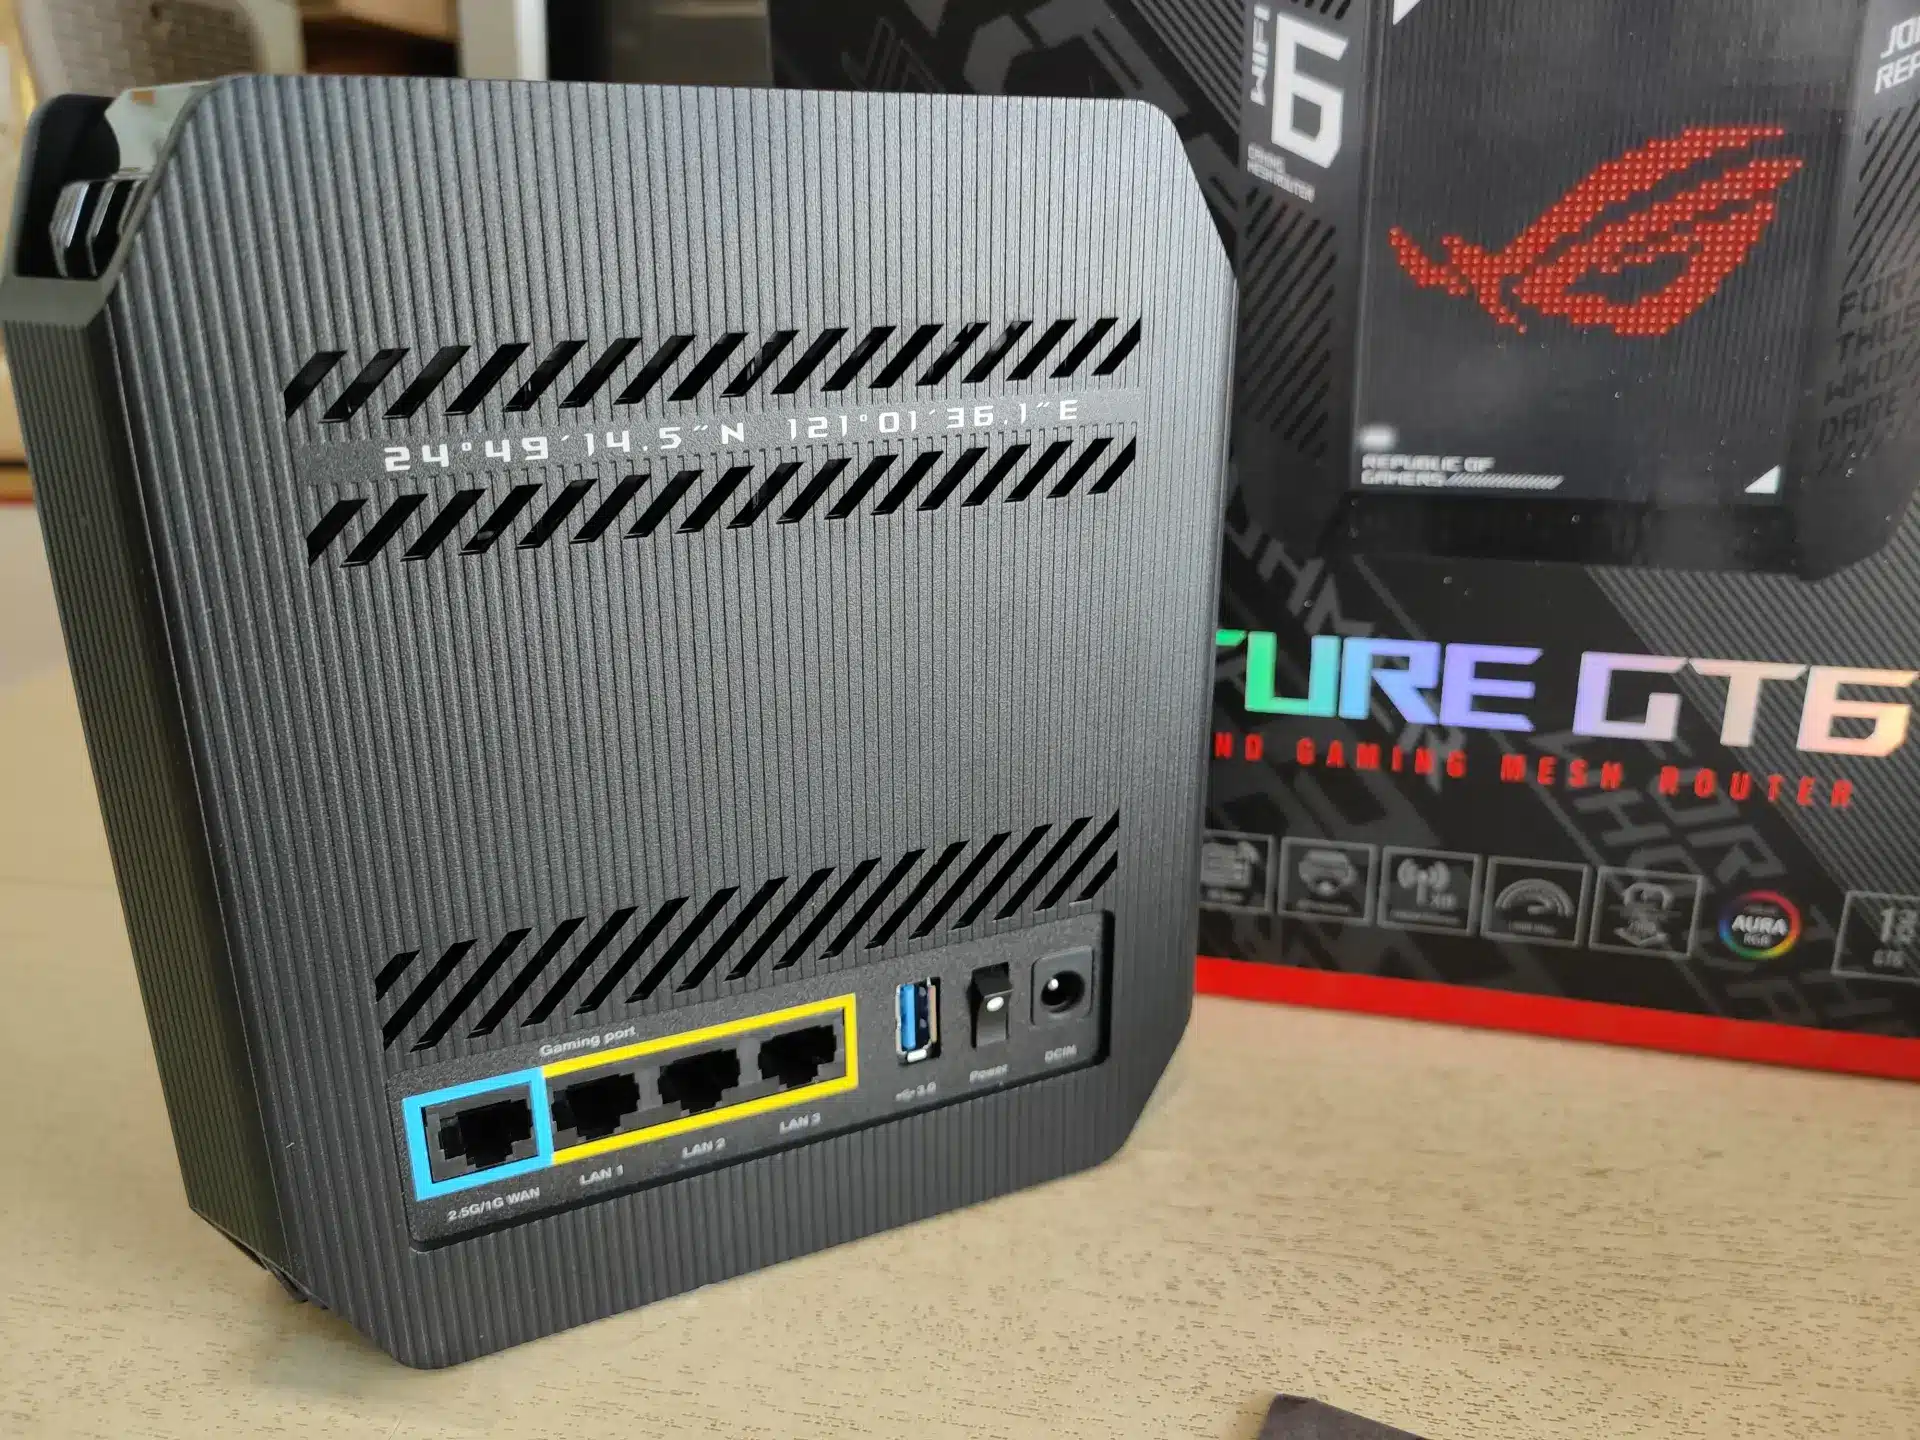 ASUS ROG RAPTURE GT6 recensione - router mesh Wi-Fi 6 per gamer e gaming